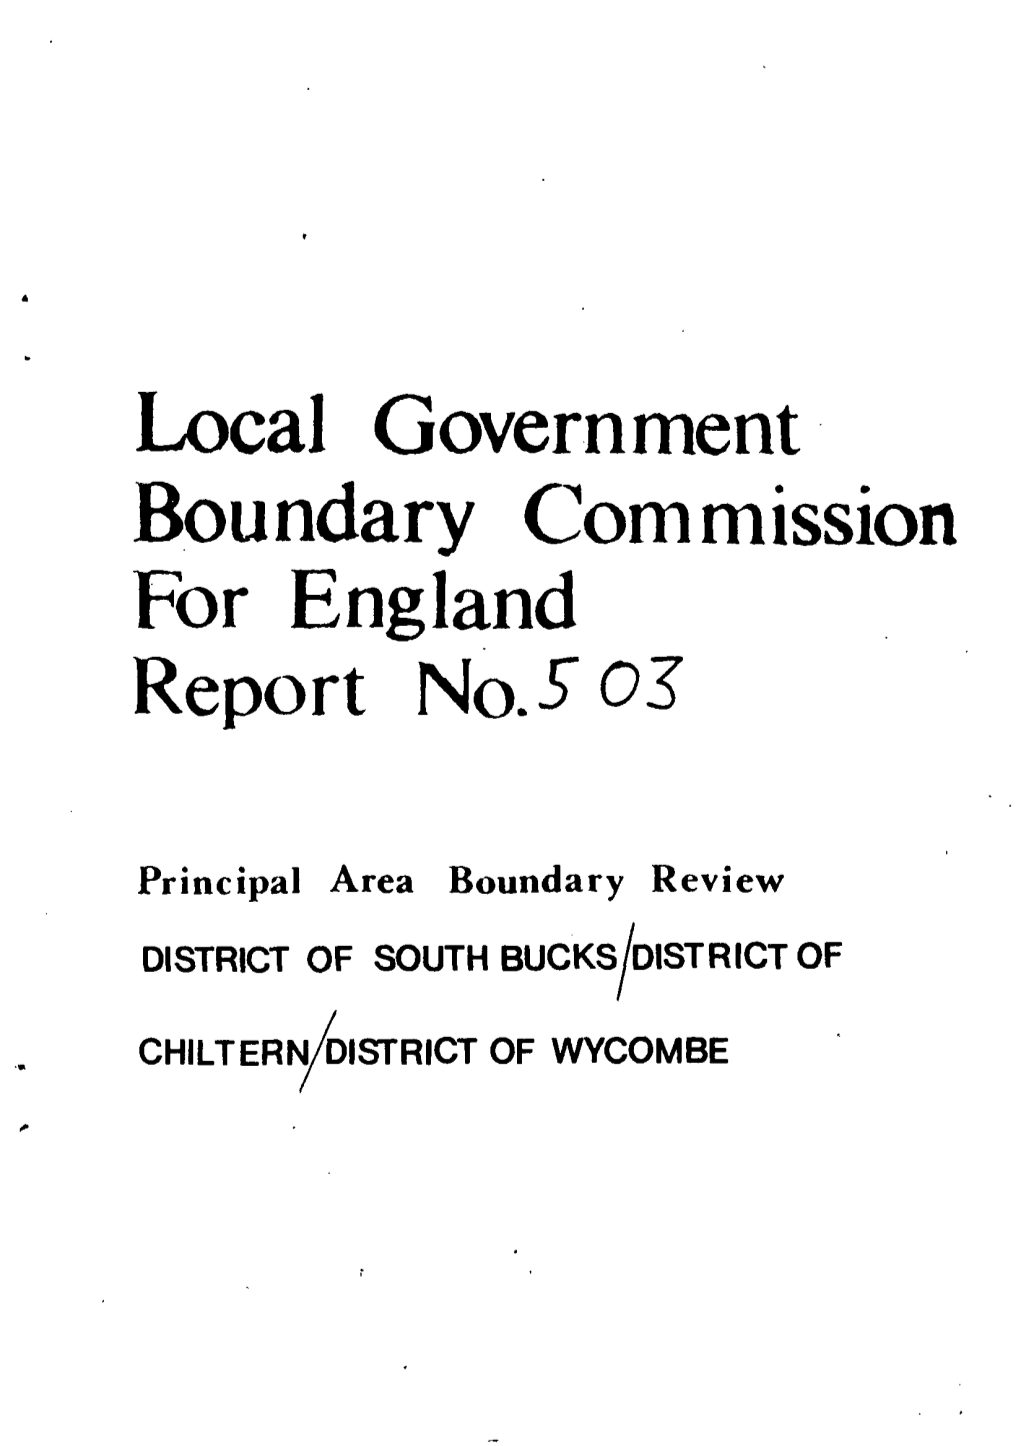 Local Government Boundary Commission for England Report No.-5"OJ